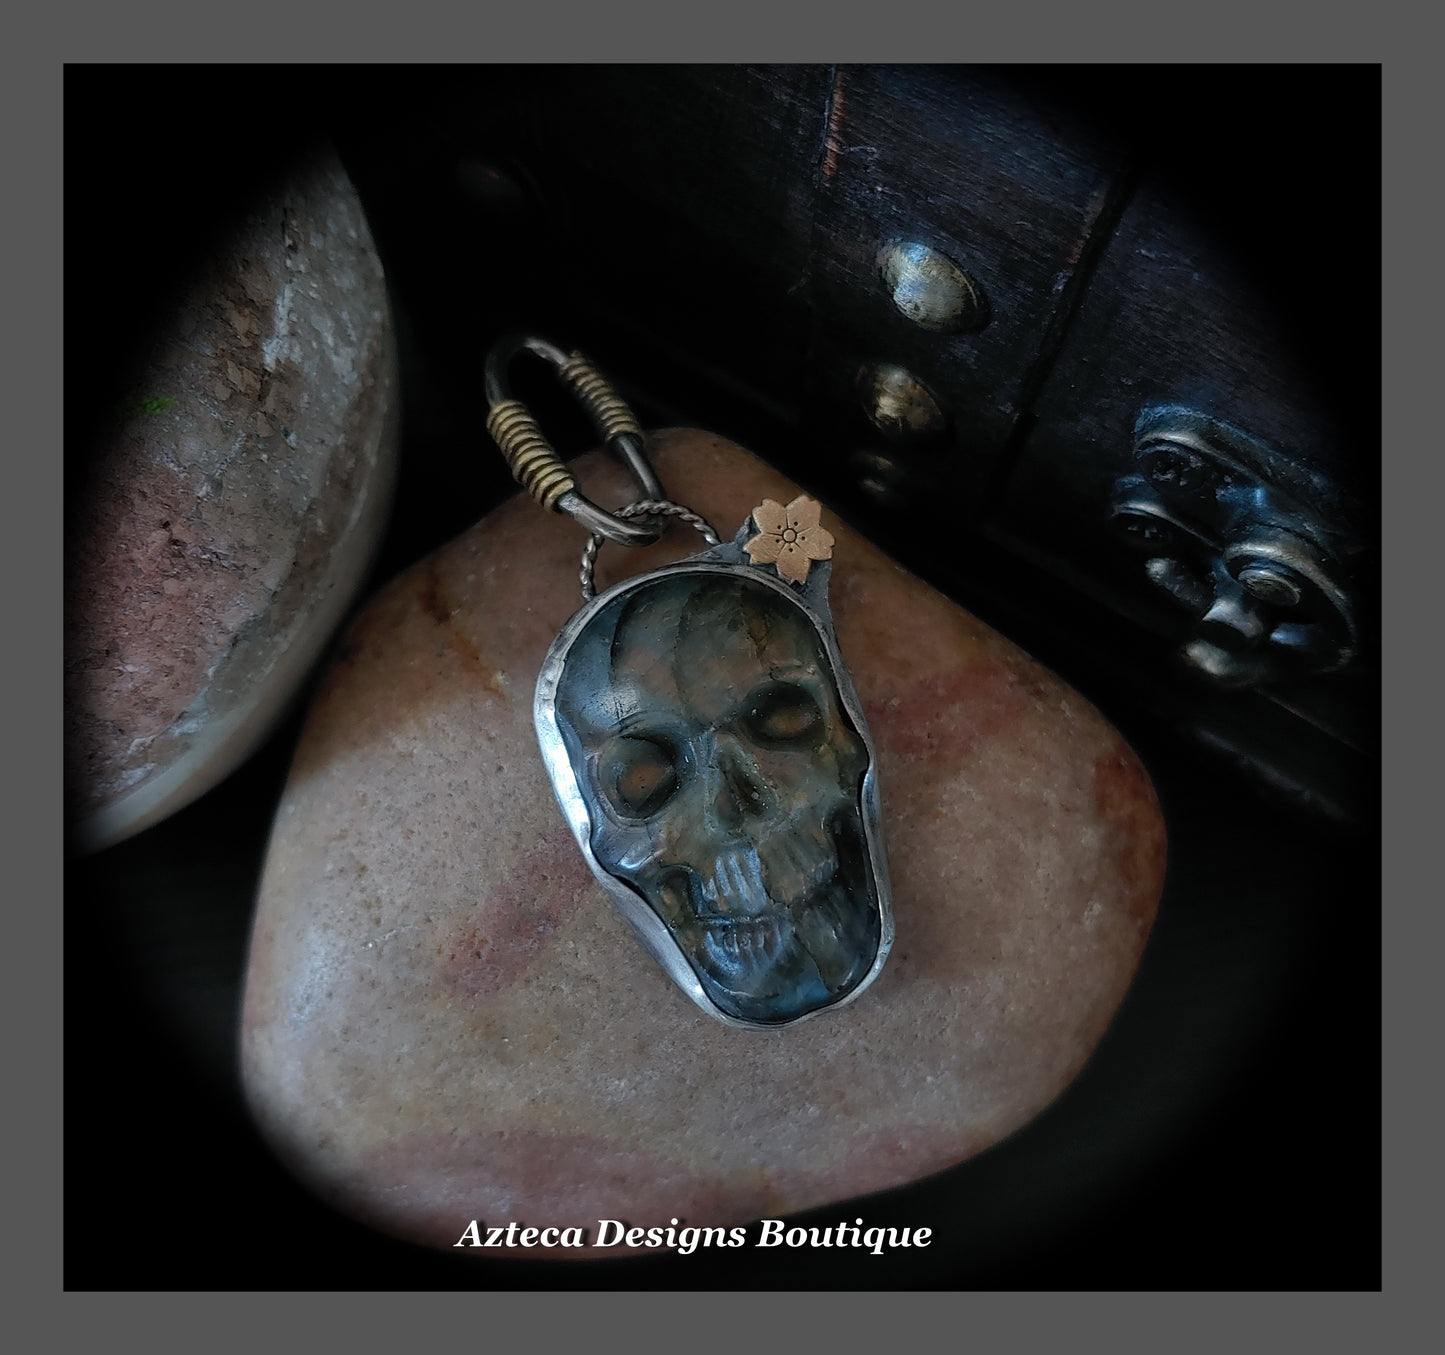 Sugar Skull Pendant + Carved Labradorite + Hand Fabricated Argentium Silver + Brass